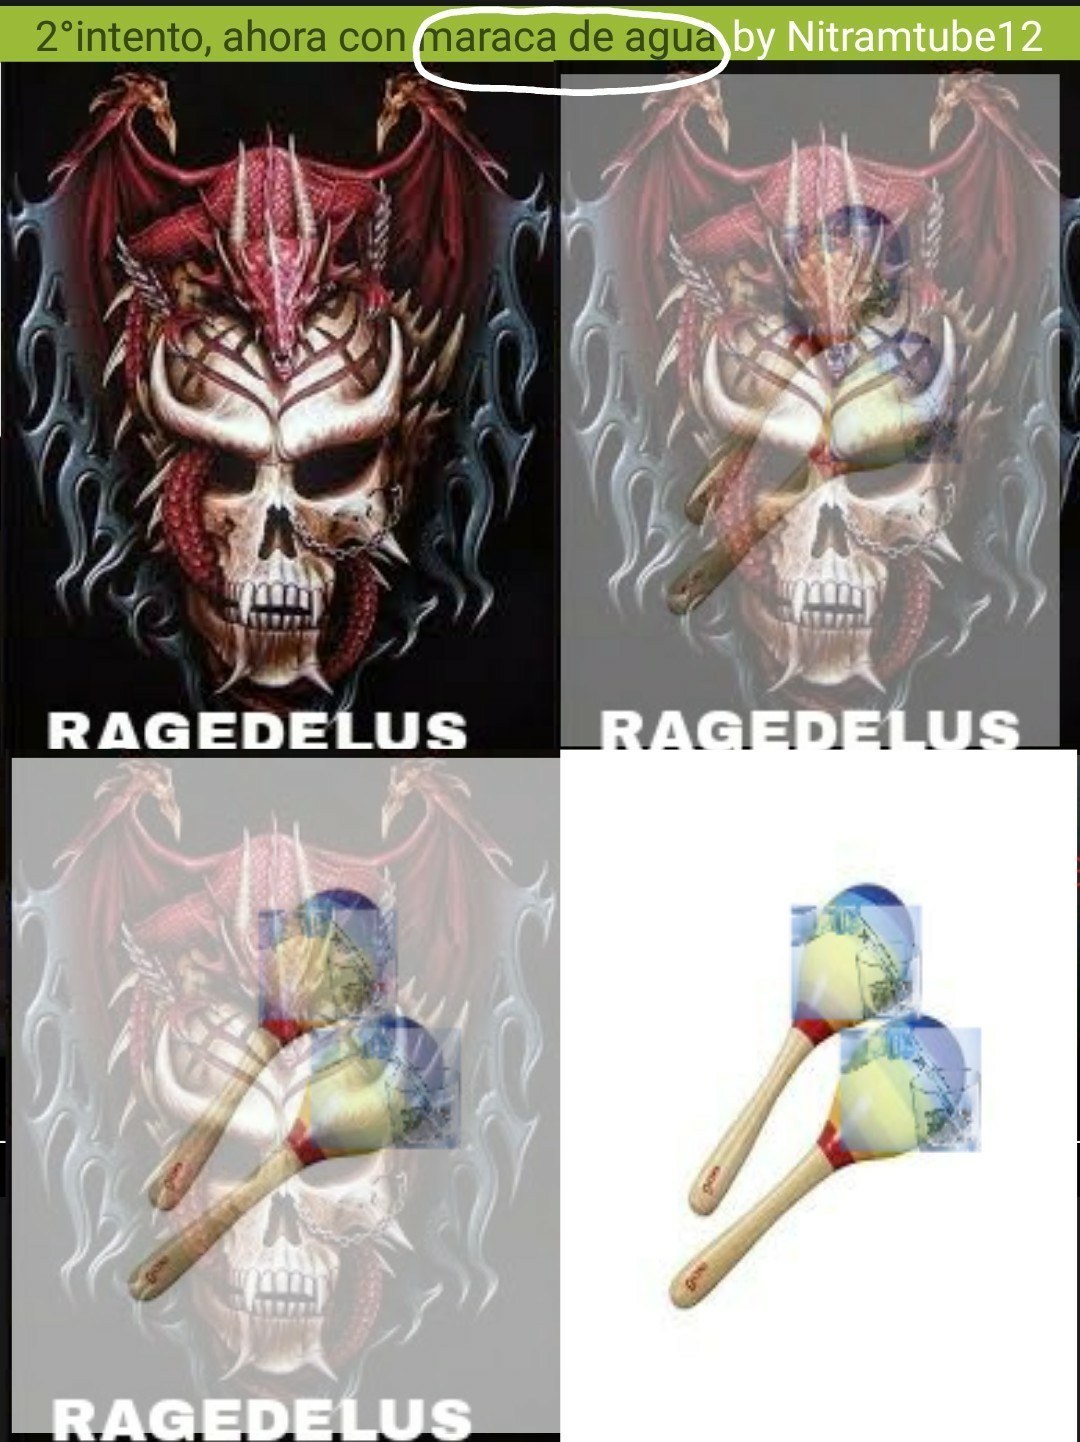 RAGEDELUS - meme